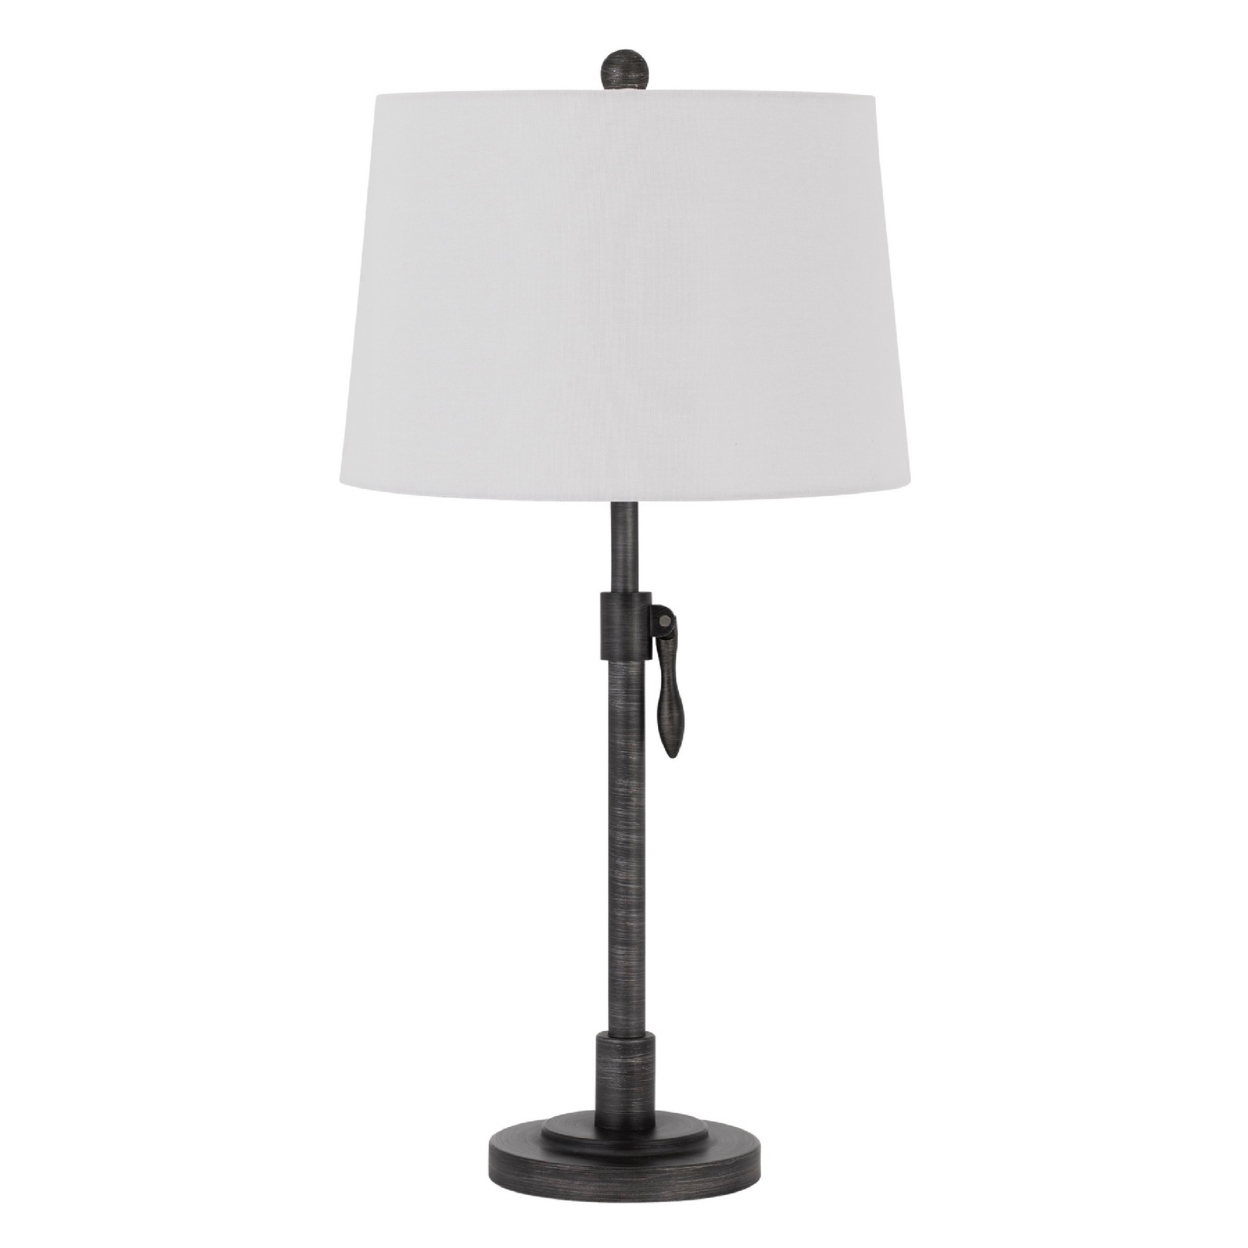 26 Inch Adjustable Metal Table Lamp With Latch, Heather Gray- Saltoro Sherpi